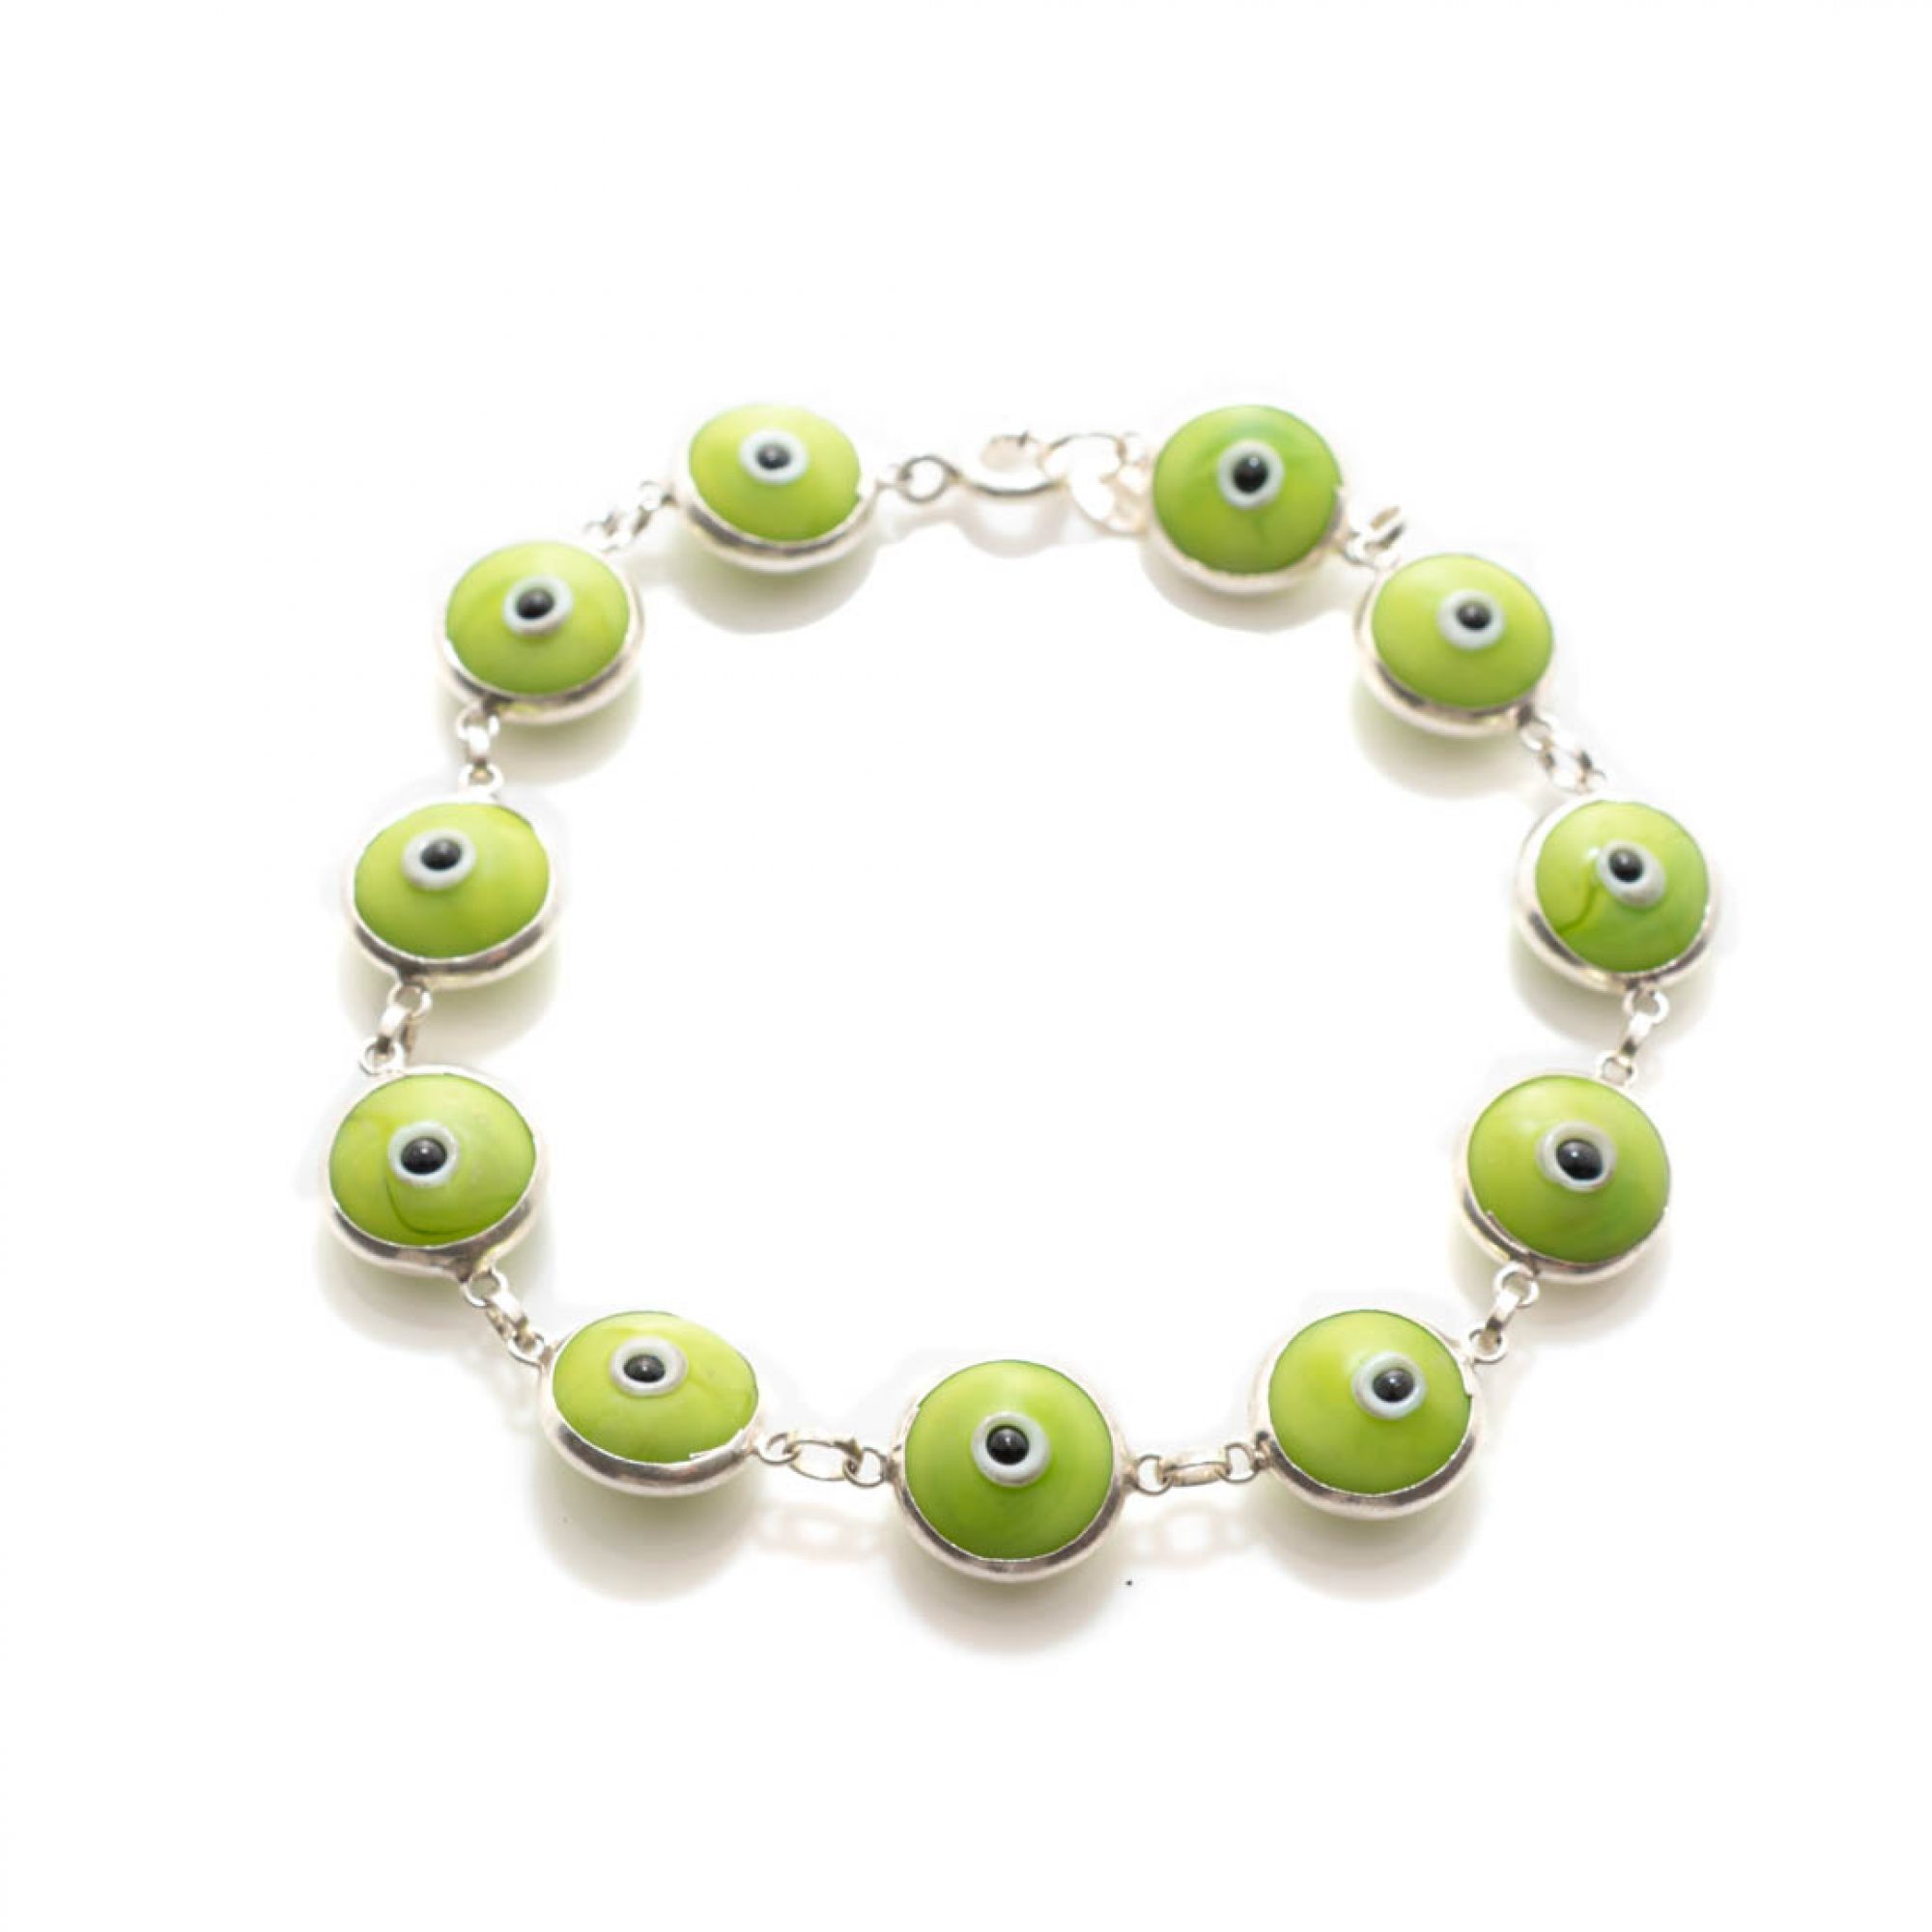 Eye bracelet with green stones